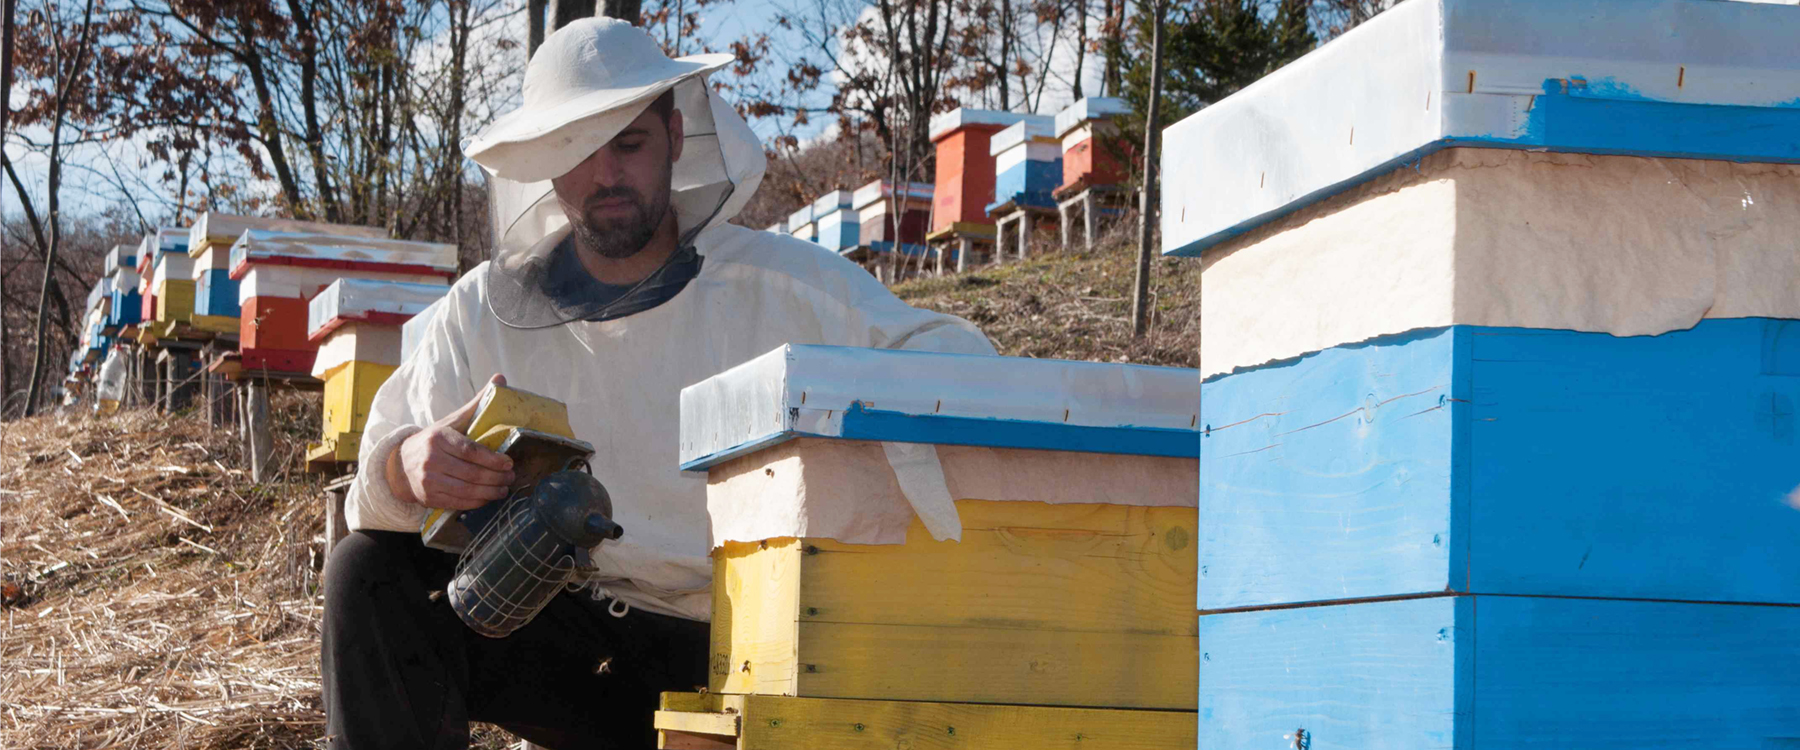 Gëzim Gjuri bij zijn bijenbedrijf in Kosovo. Gjuri keerde vrijwillig terug in 2012.| Foto: IOM, 2015